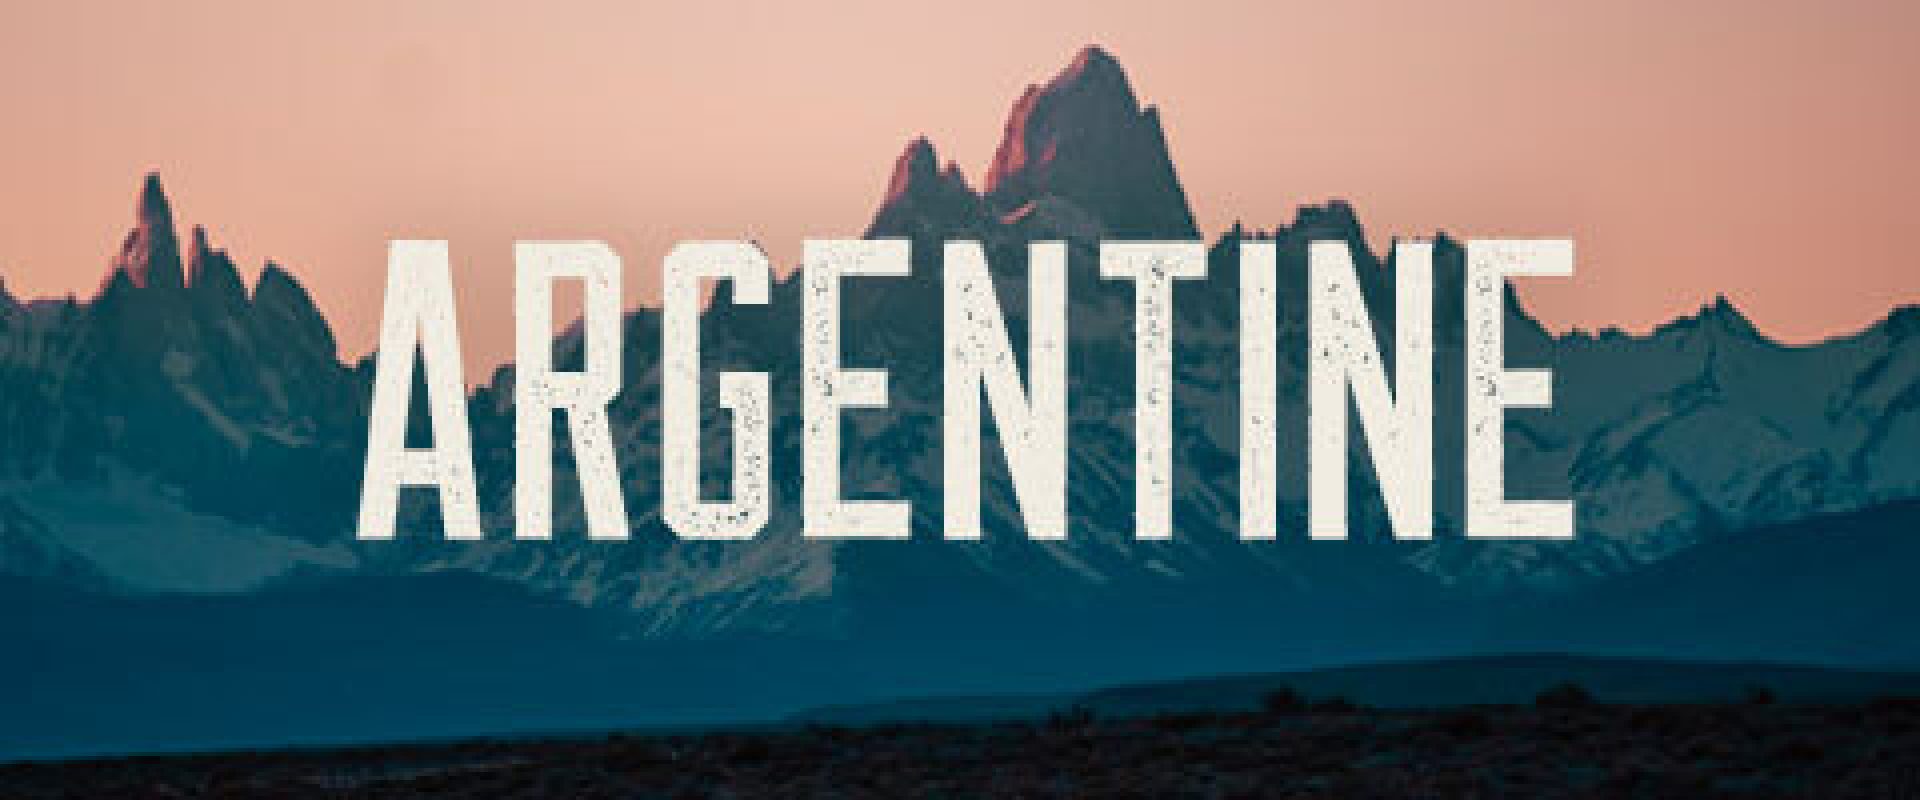 OnVagabonde_Argentina_Banners_mobile-FR